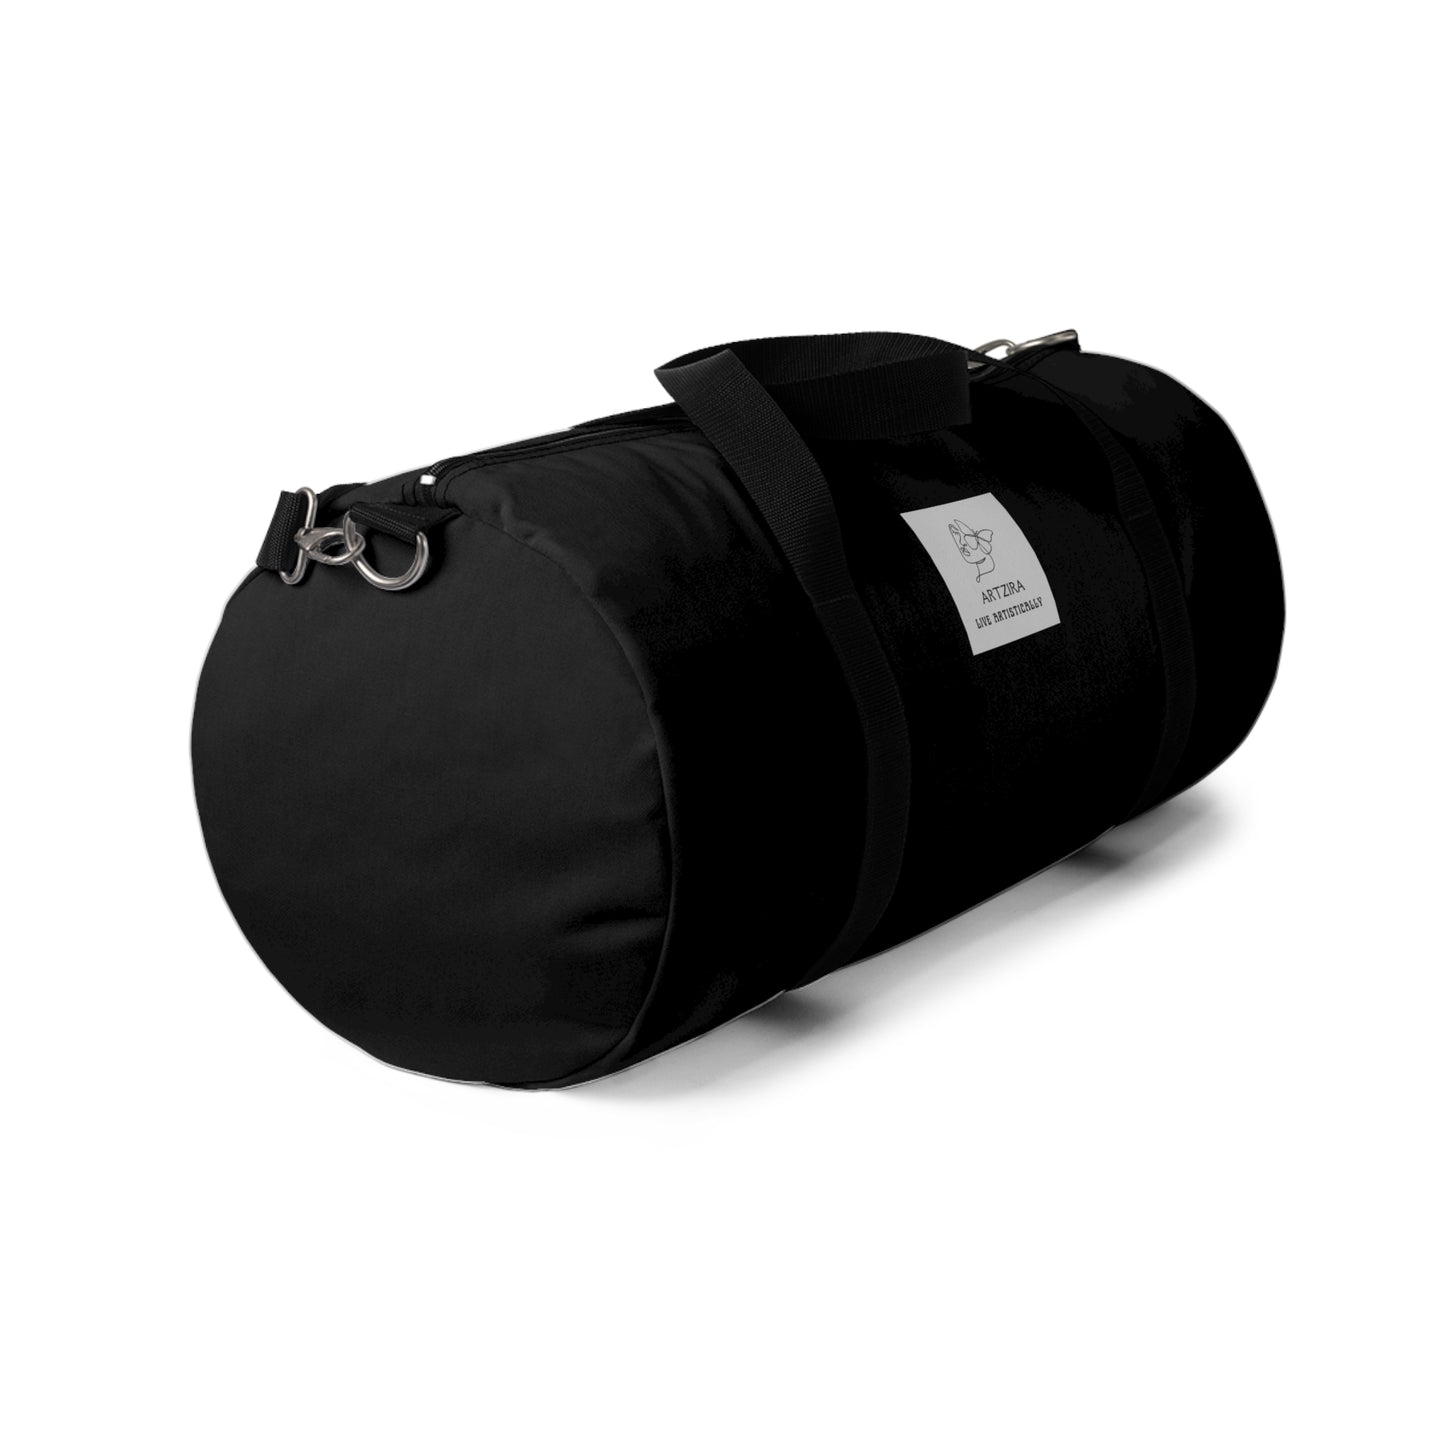 Duffel Bag Travel Bag Black Gym Bag for Men